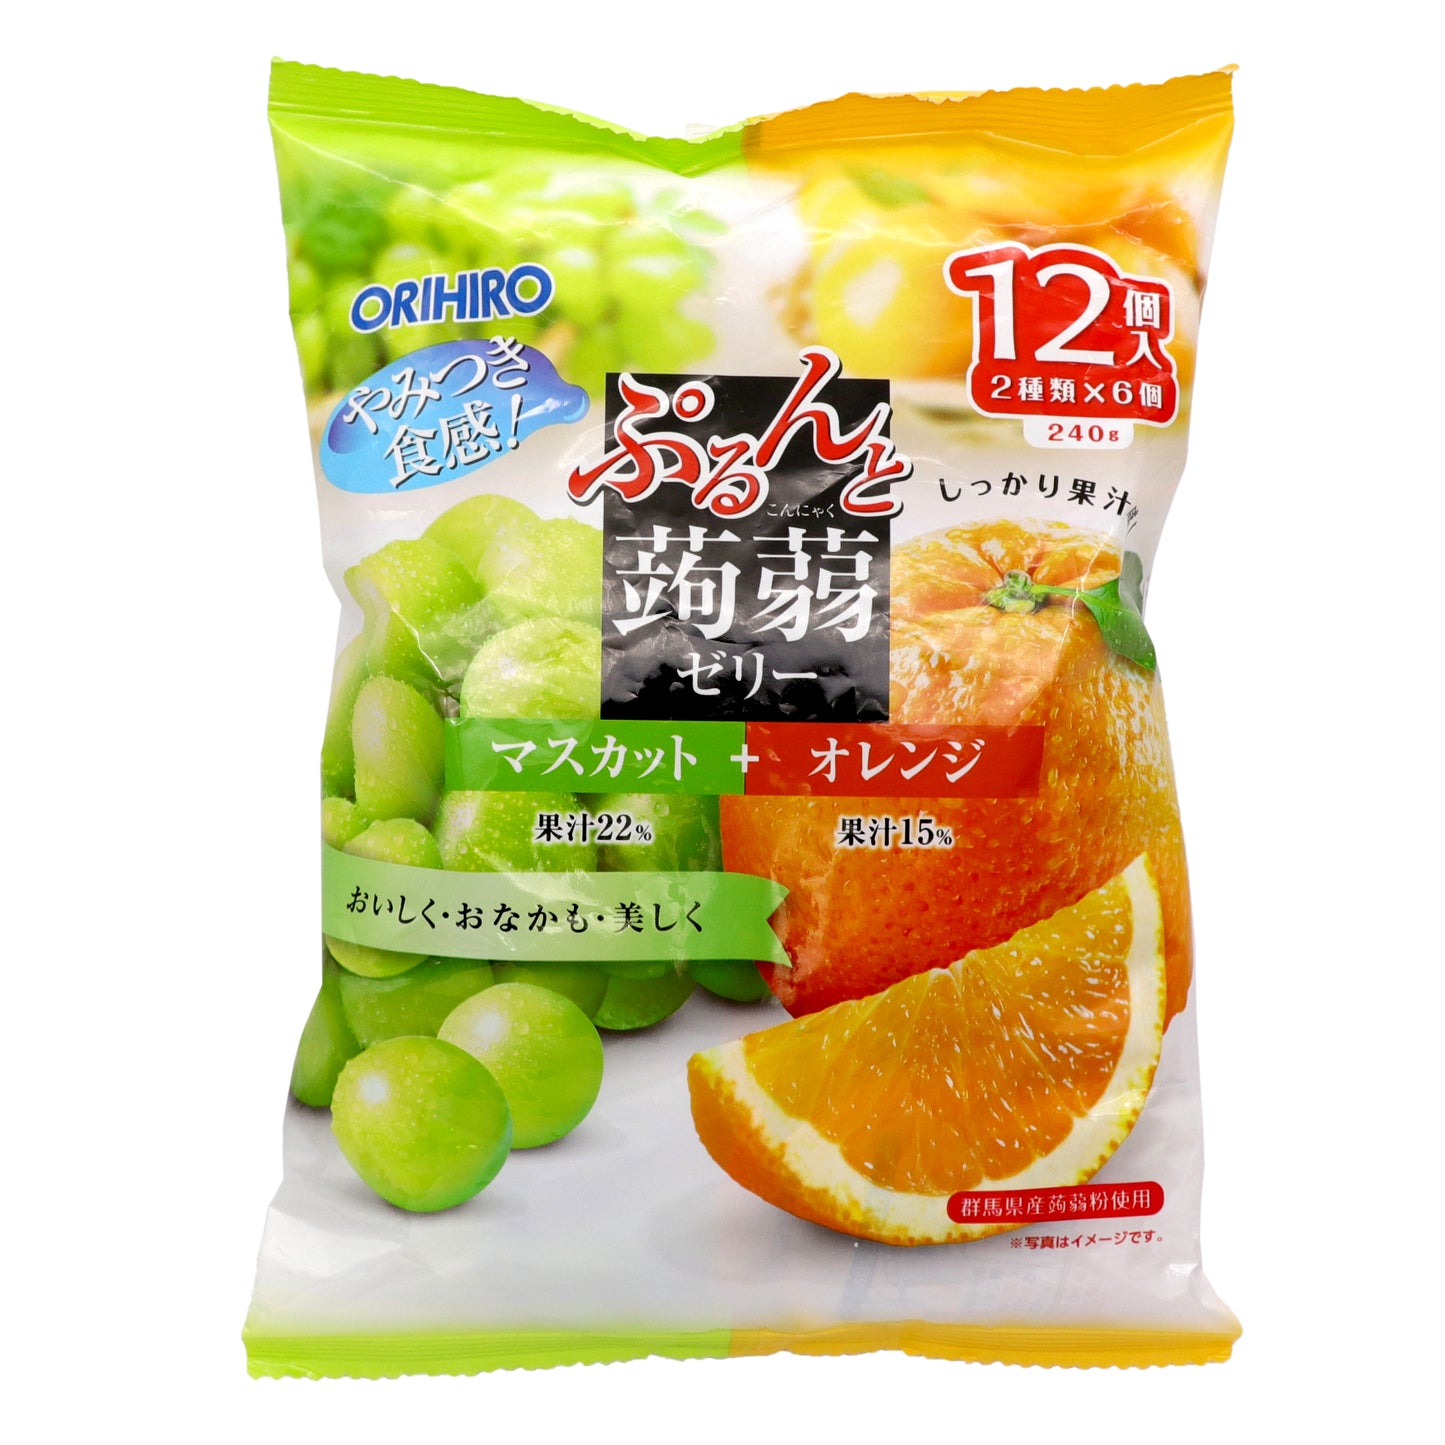 Orihiro 低卡蒟蒻果凍 麝香葡萄 + 橘子 20g x 12入